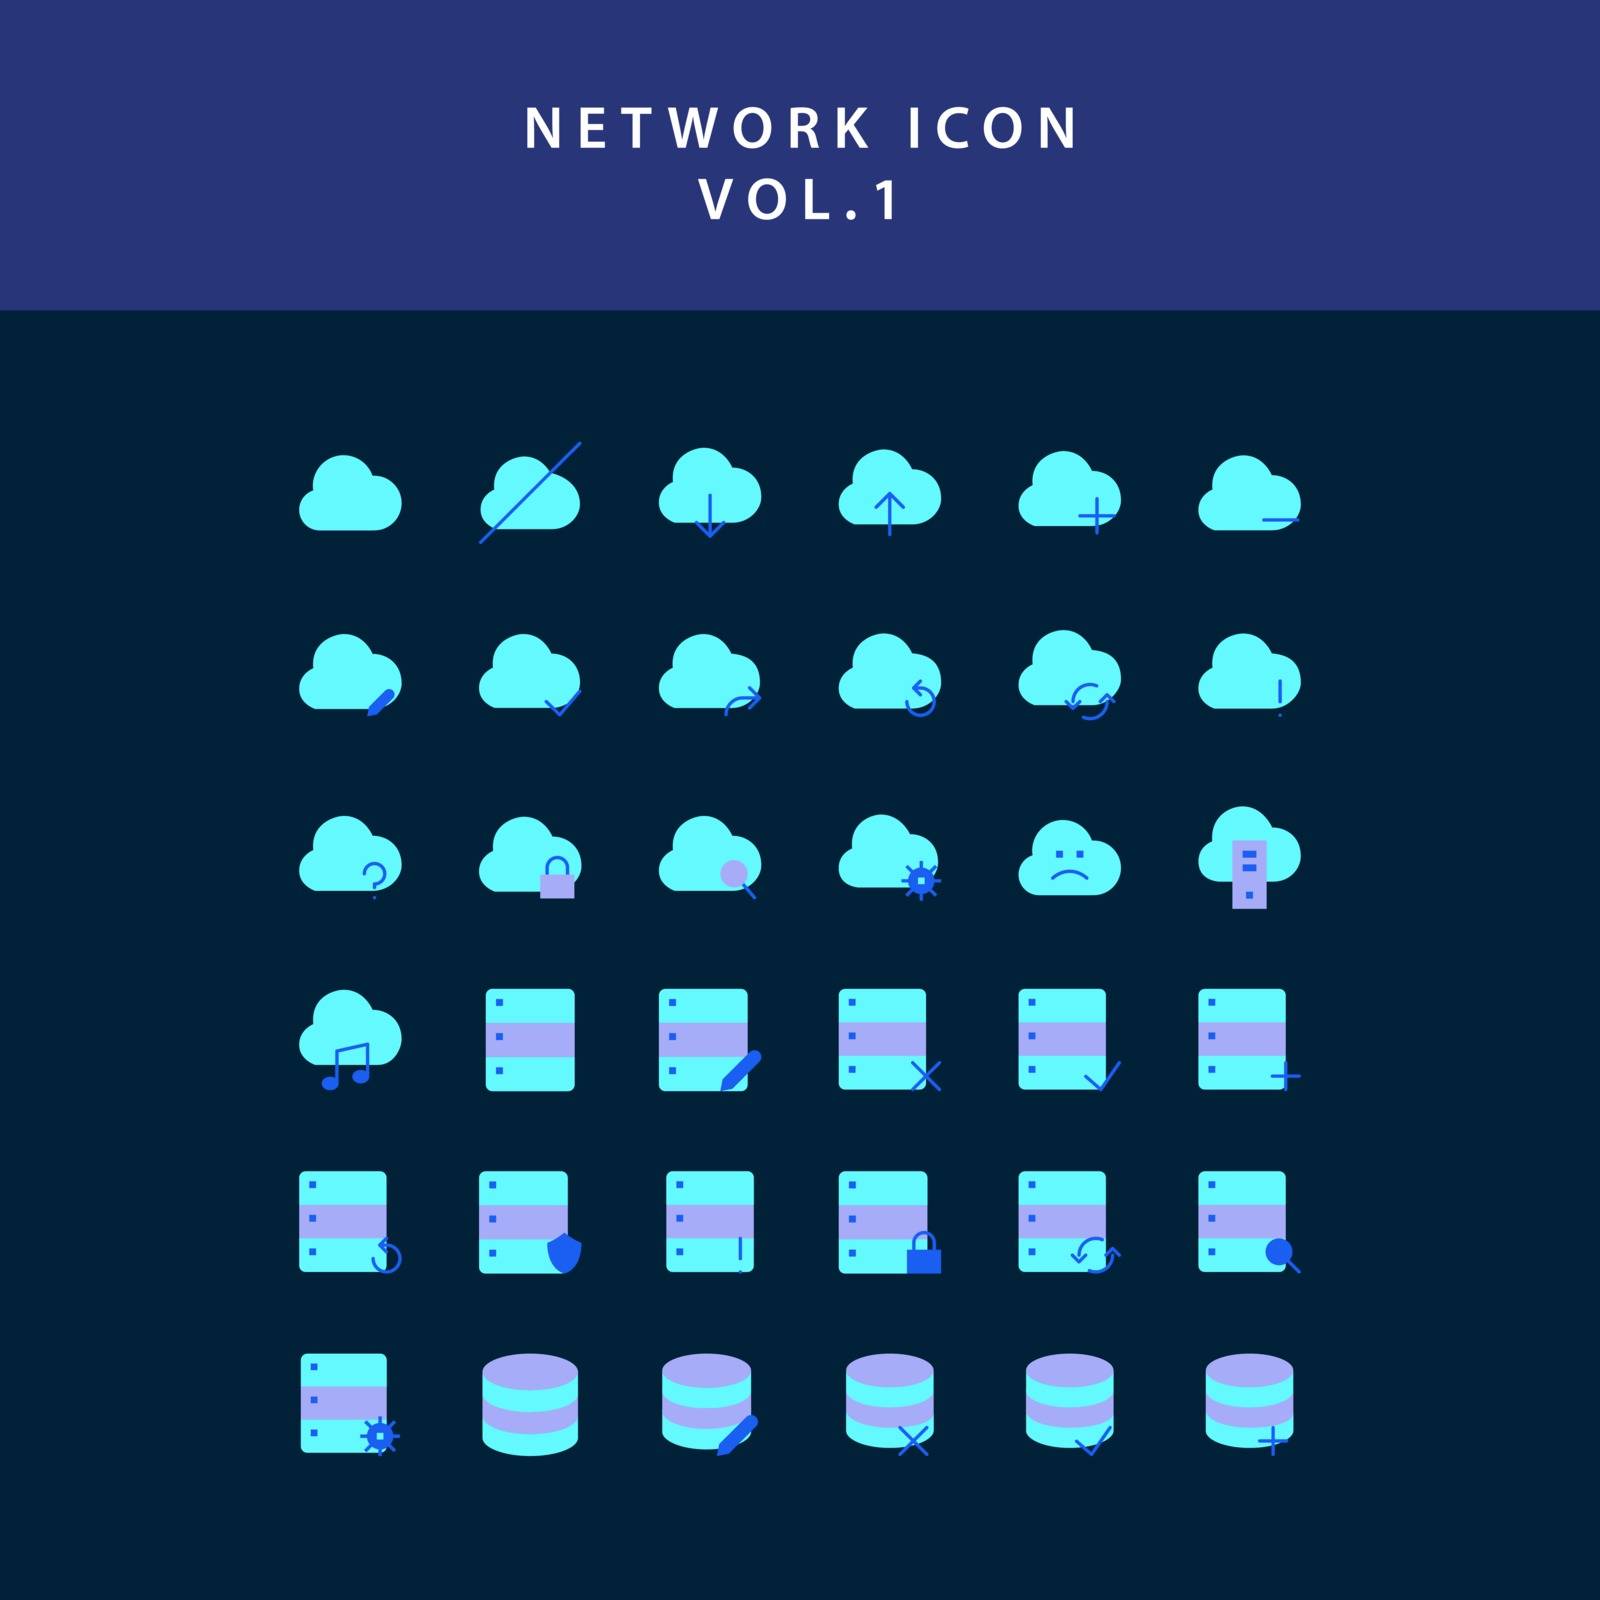 Cloud computing network  flat style design icon set vol1 by ANITA